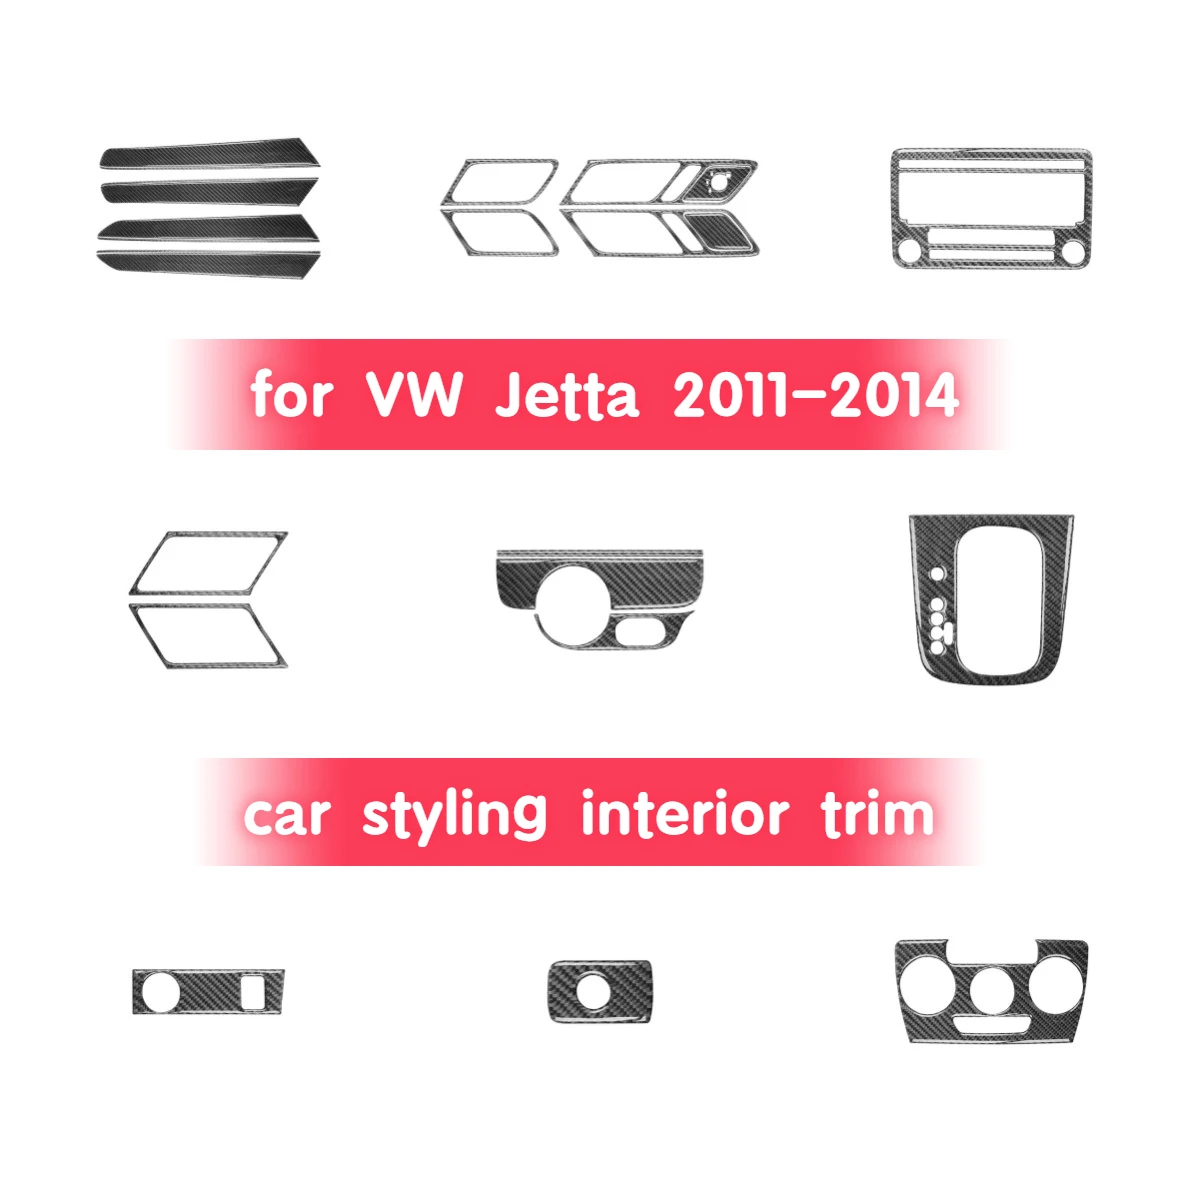 

Genuine carbon fiber car stickers suitable for Volkswagen Jetta 2011-2014, car doors, center console, car styling interior trim